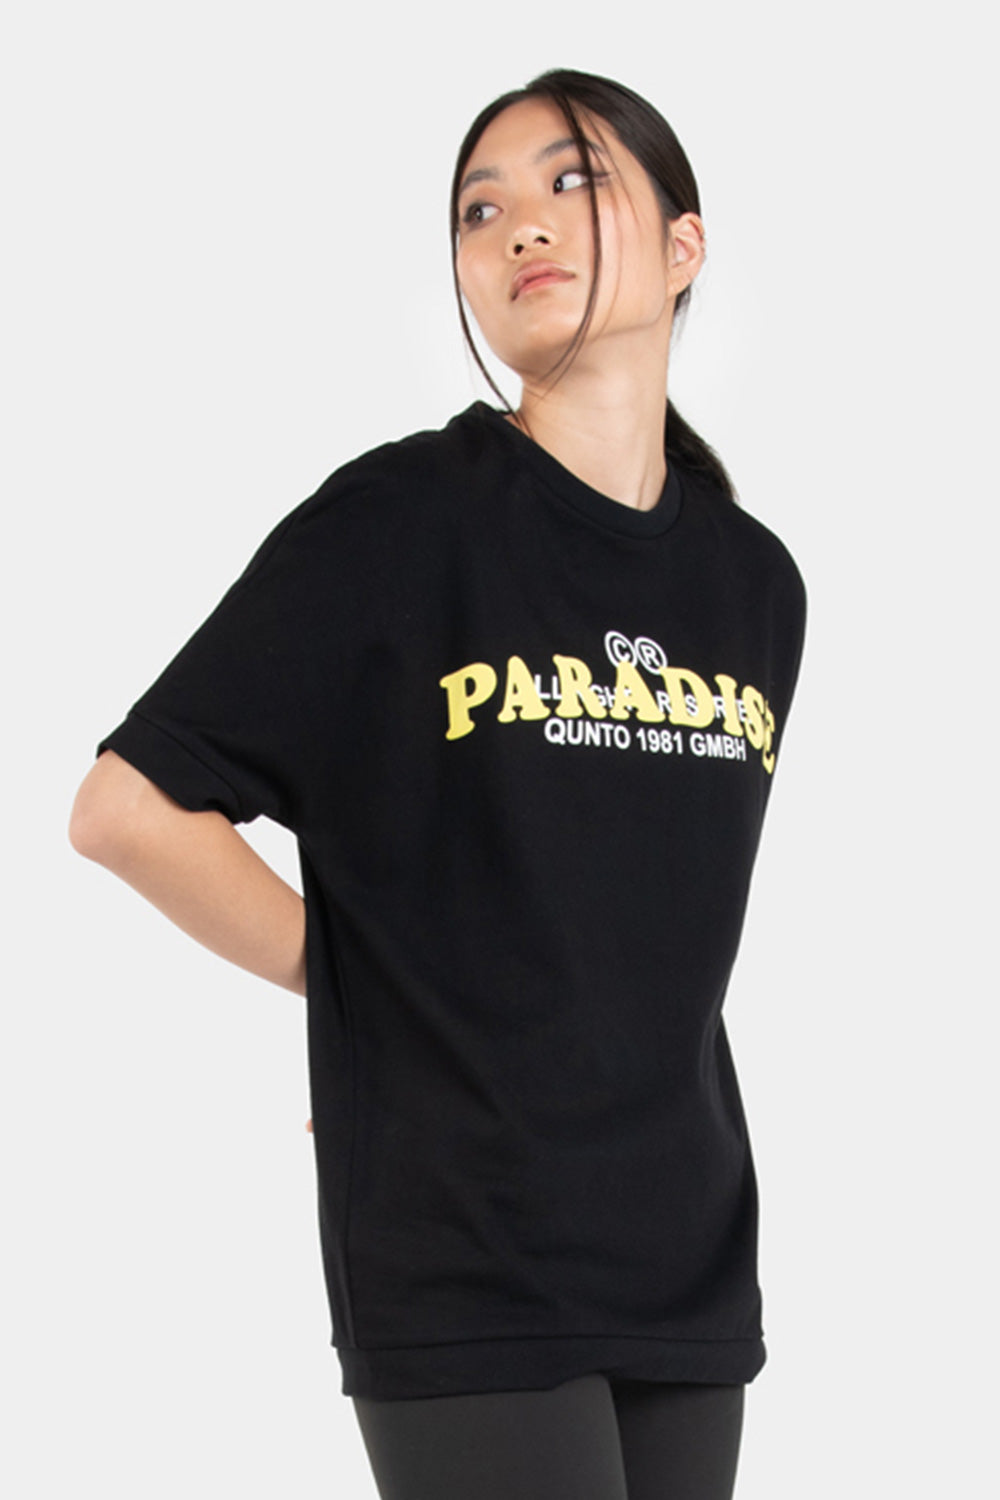 Paradise T-Shirt Yellow Cloud